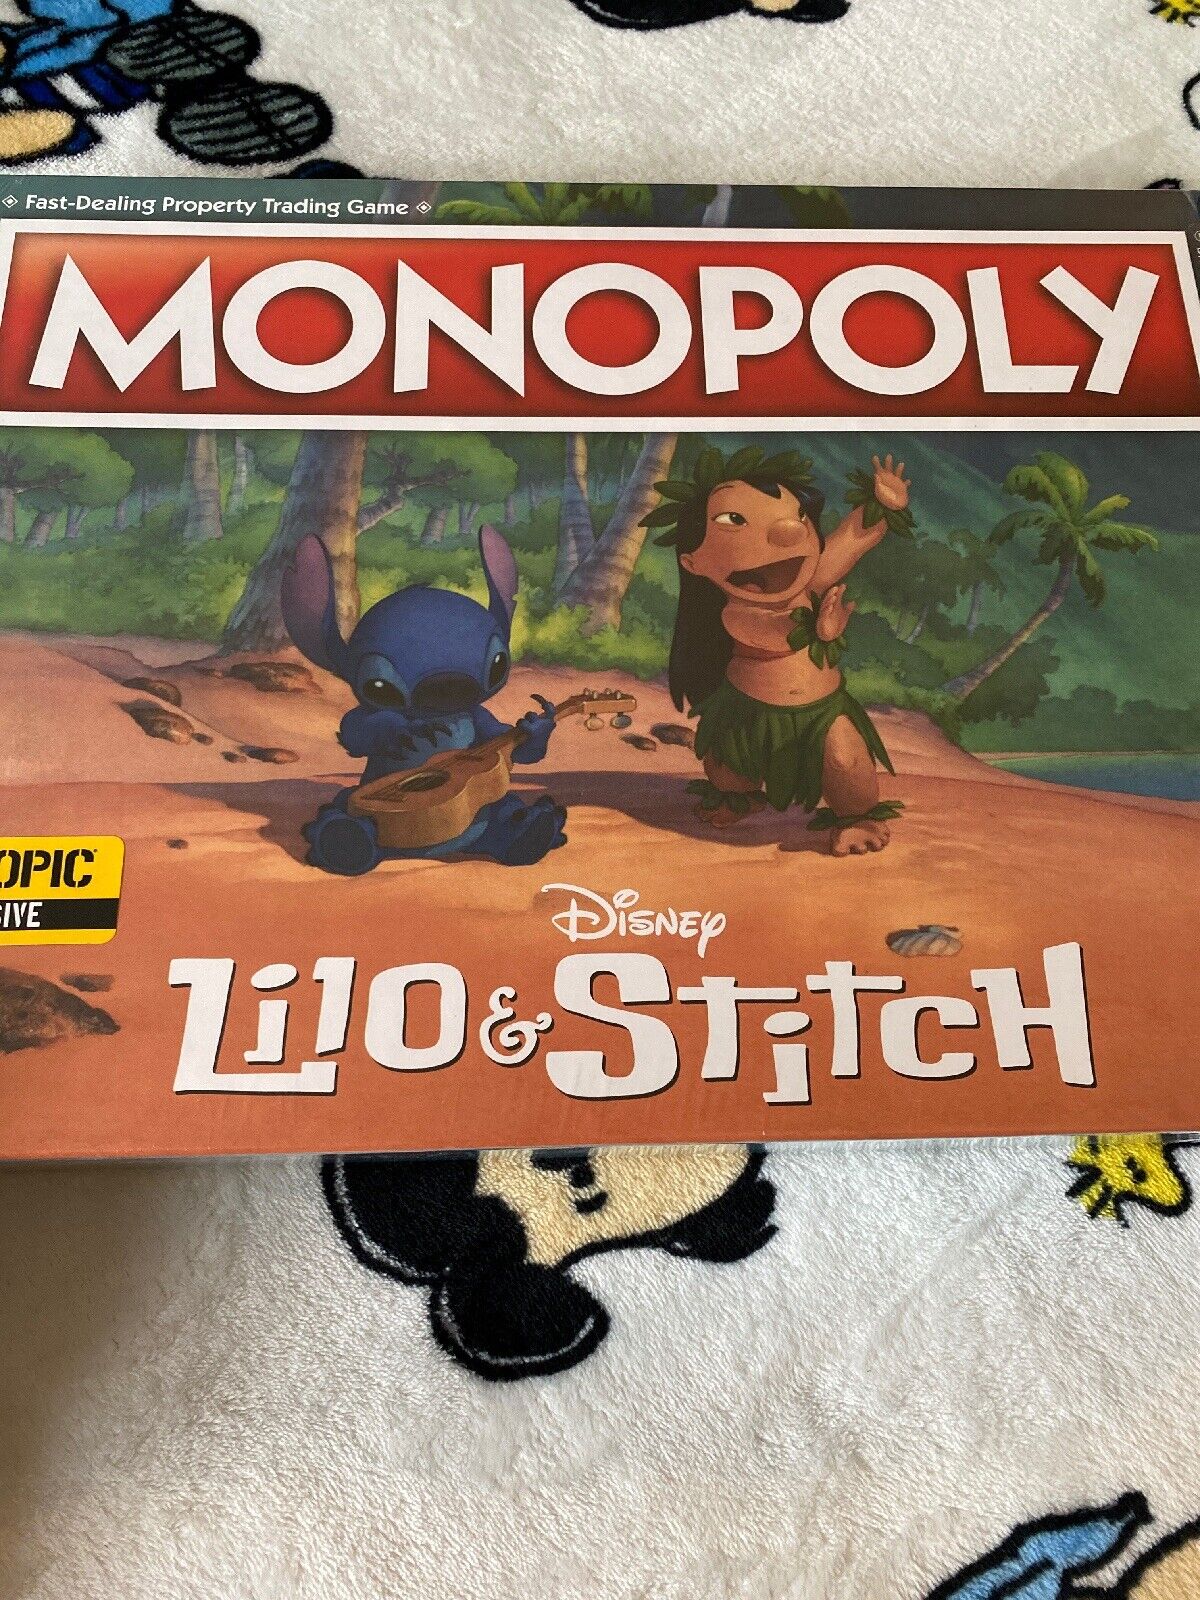 Nordstrom x Disney 'Lilo & Stitch' Monopoly Board Game 44.99